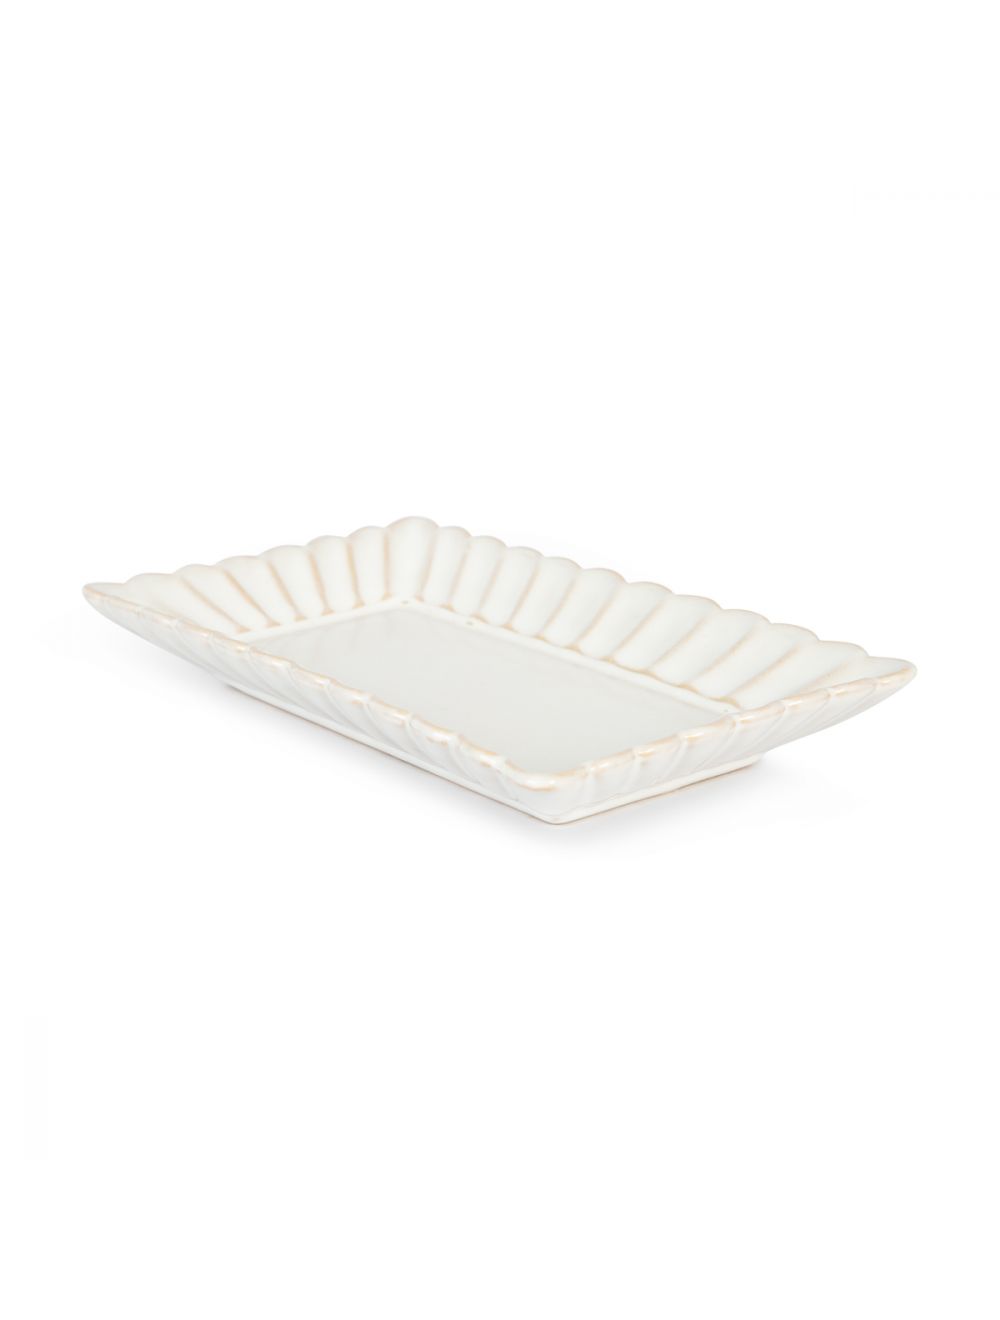 Scallop Rim Rectangle Platter